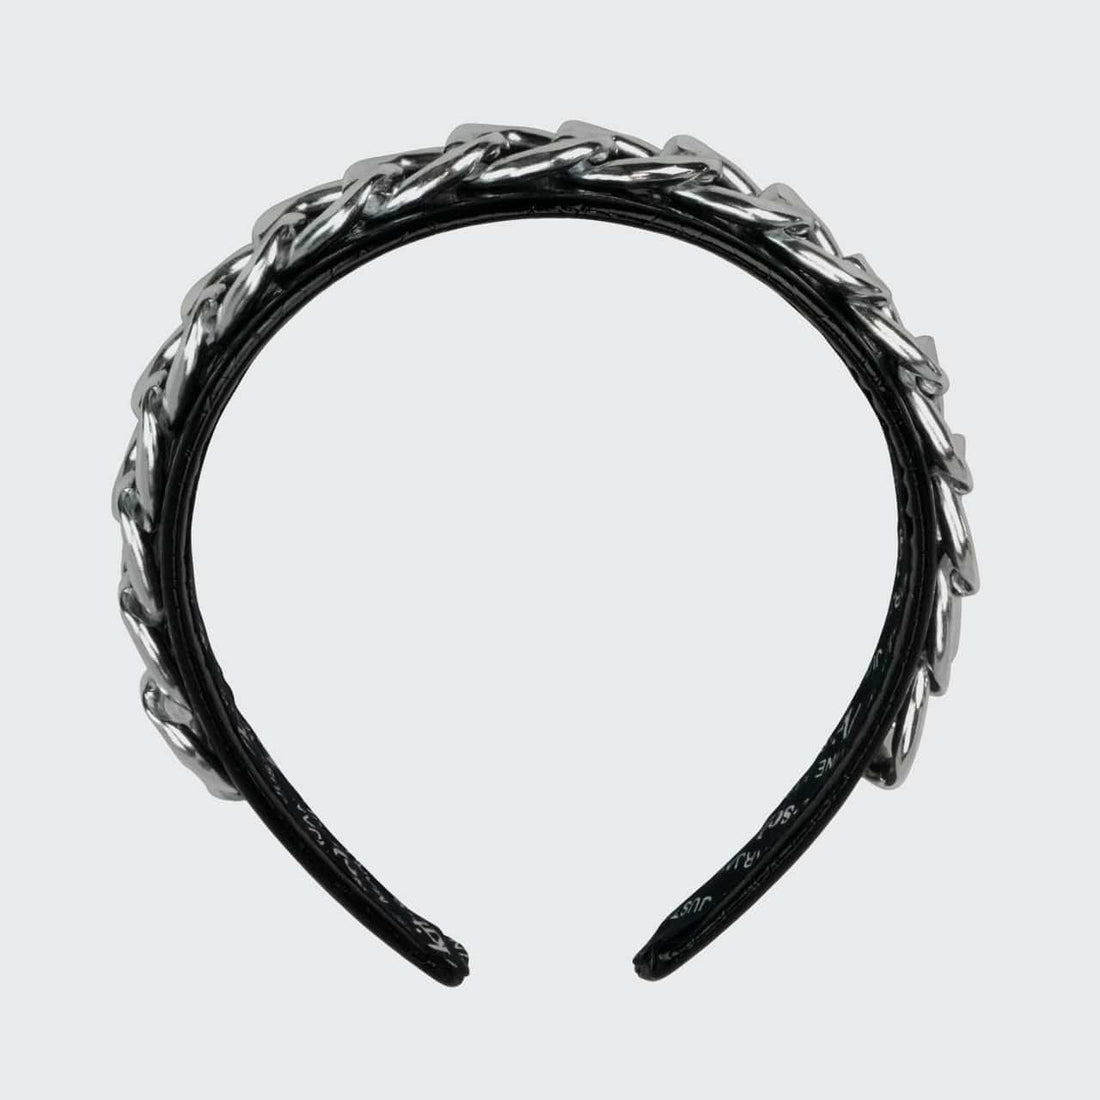 Patent Headband with Chain - Black